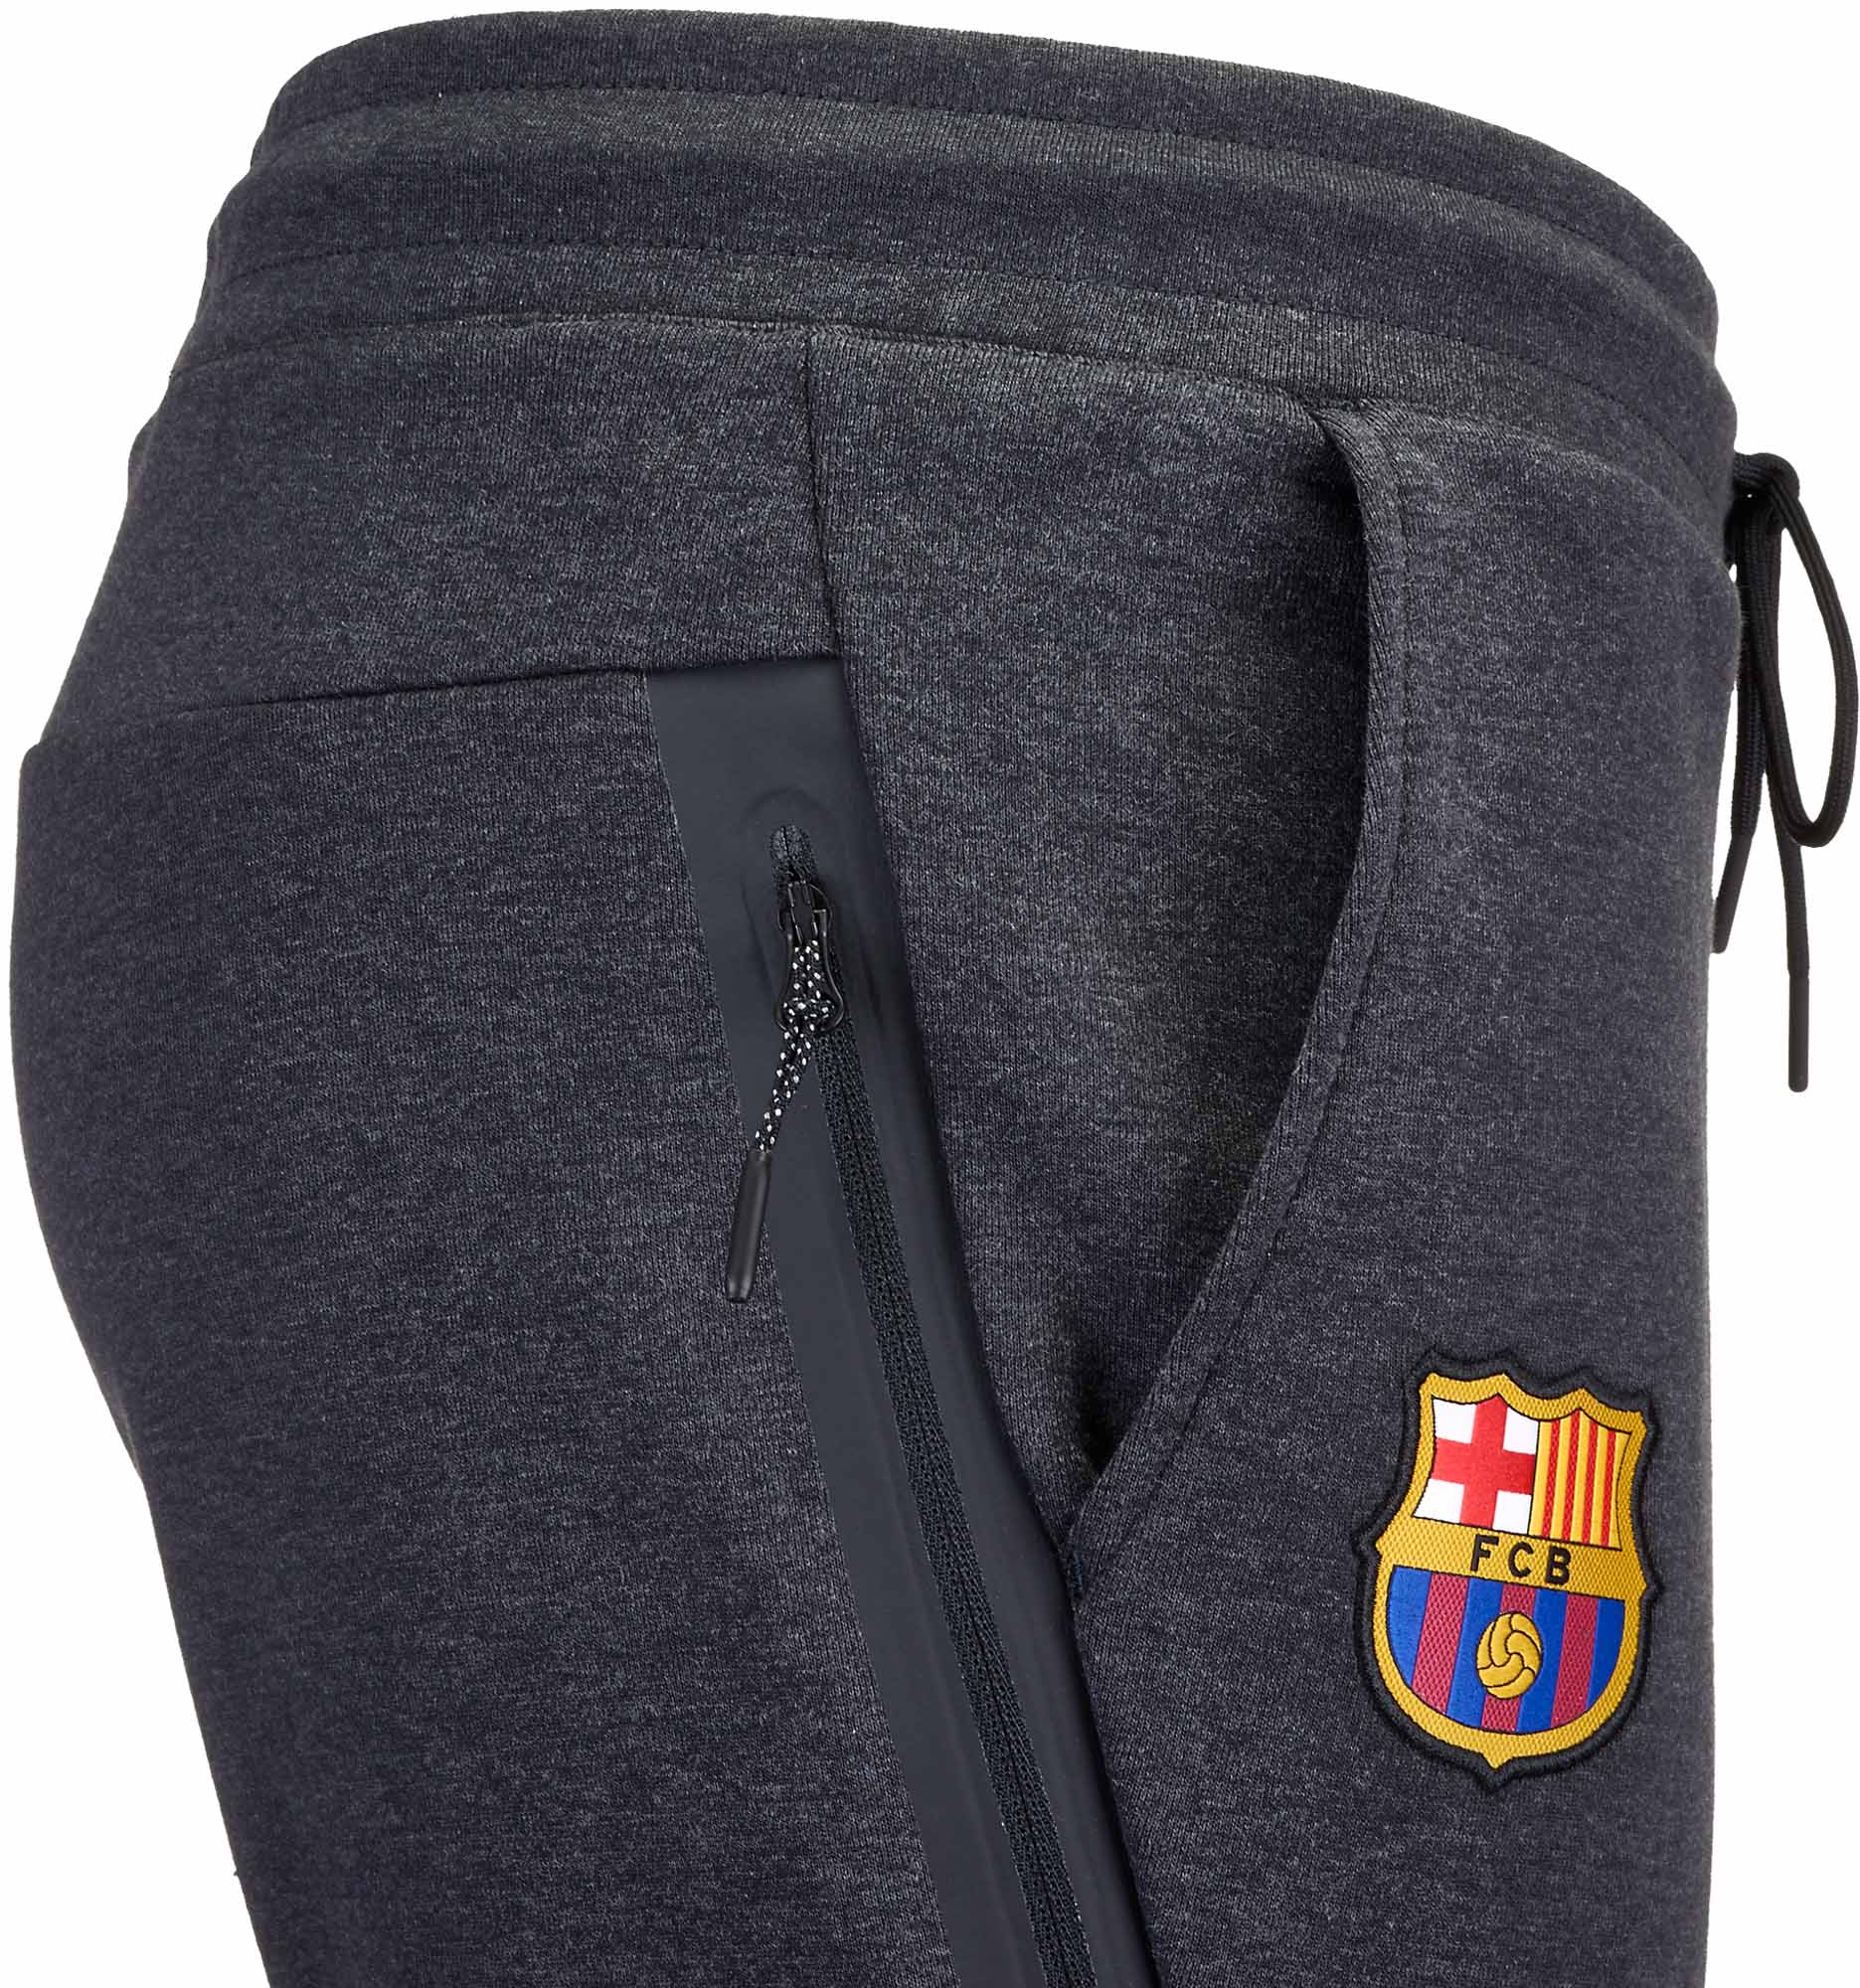 barcelona tech fleece pants